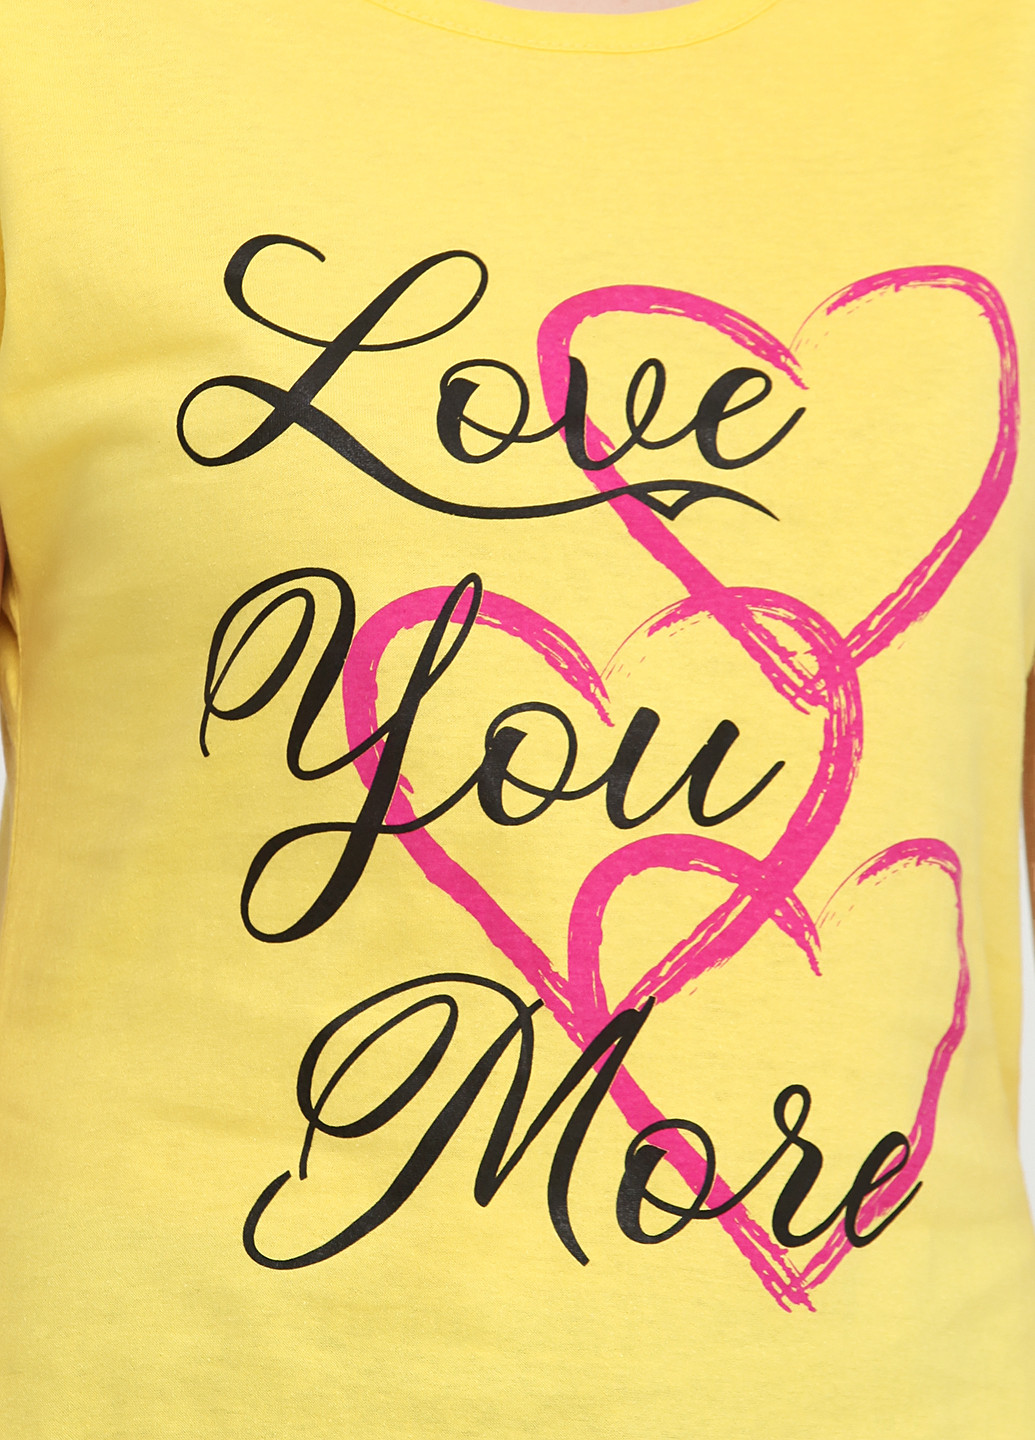 Желтая летняя футболка Carla Mara